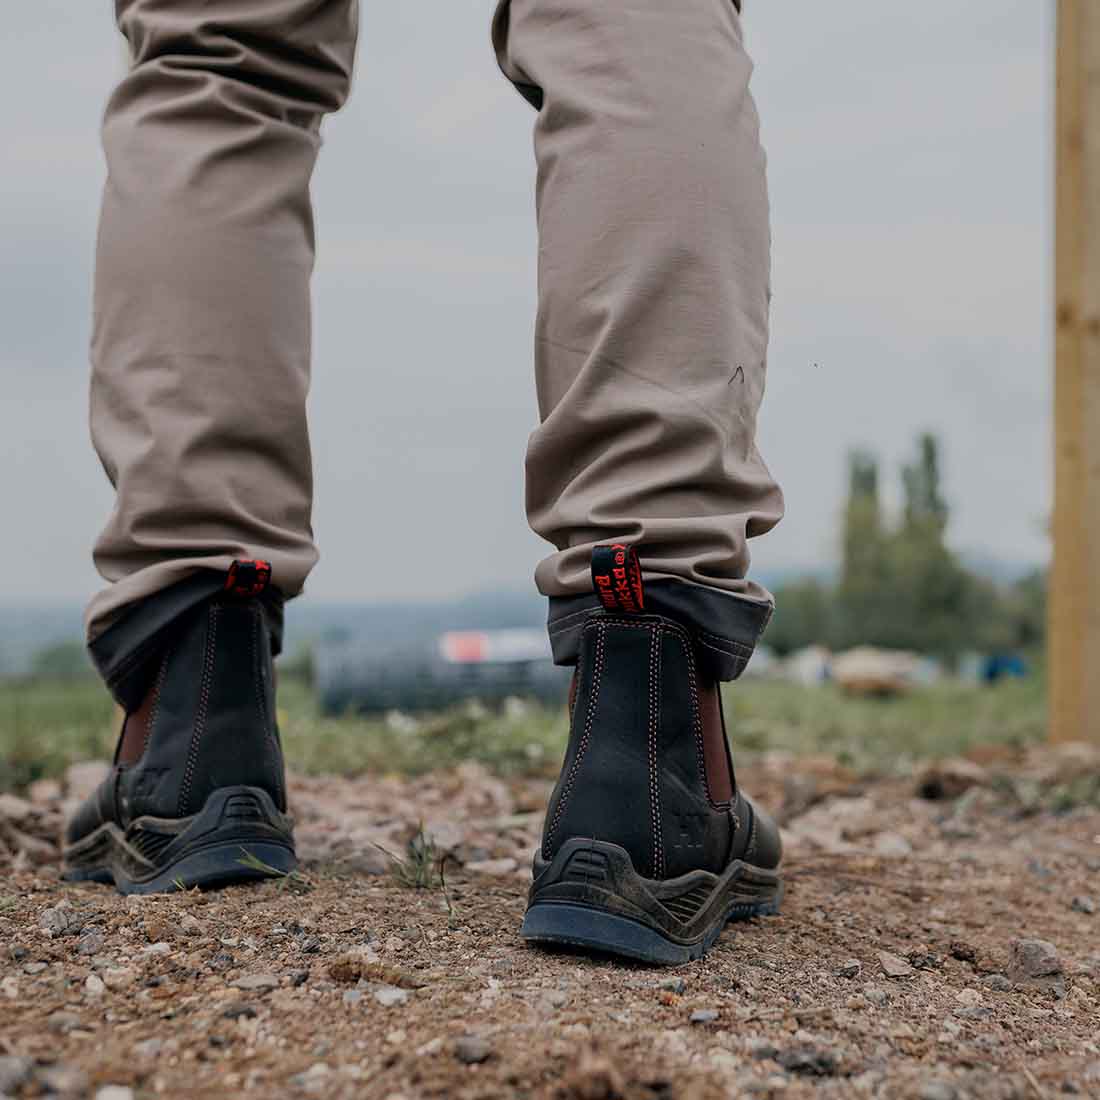 Hard Yakka Banjo Men's Dealer Boots in Brown | Men's Brown Steel Toe Safety Boots